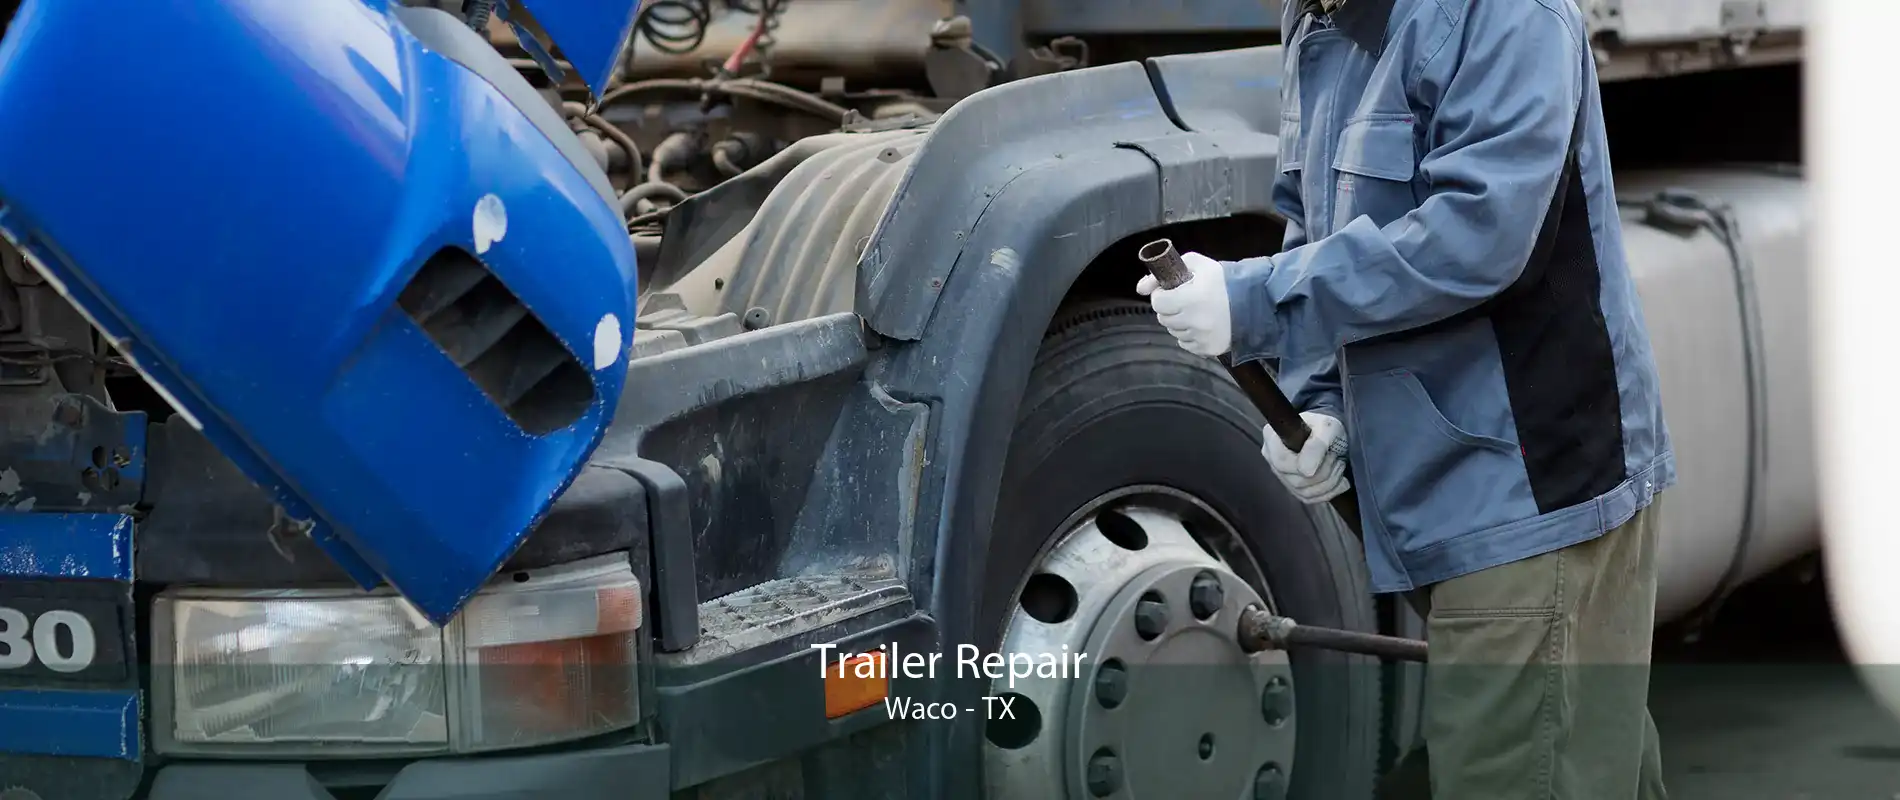 Trailer Repair Waco - TX